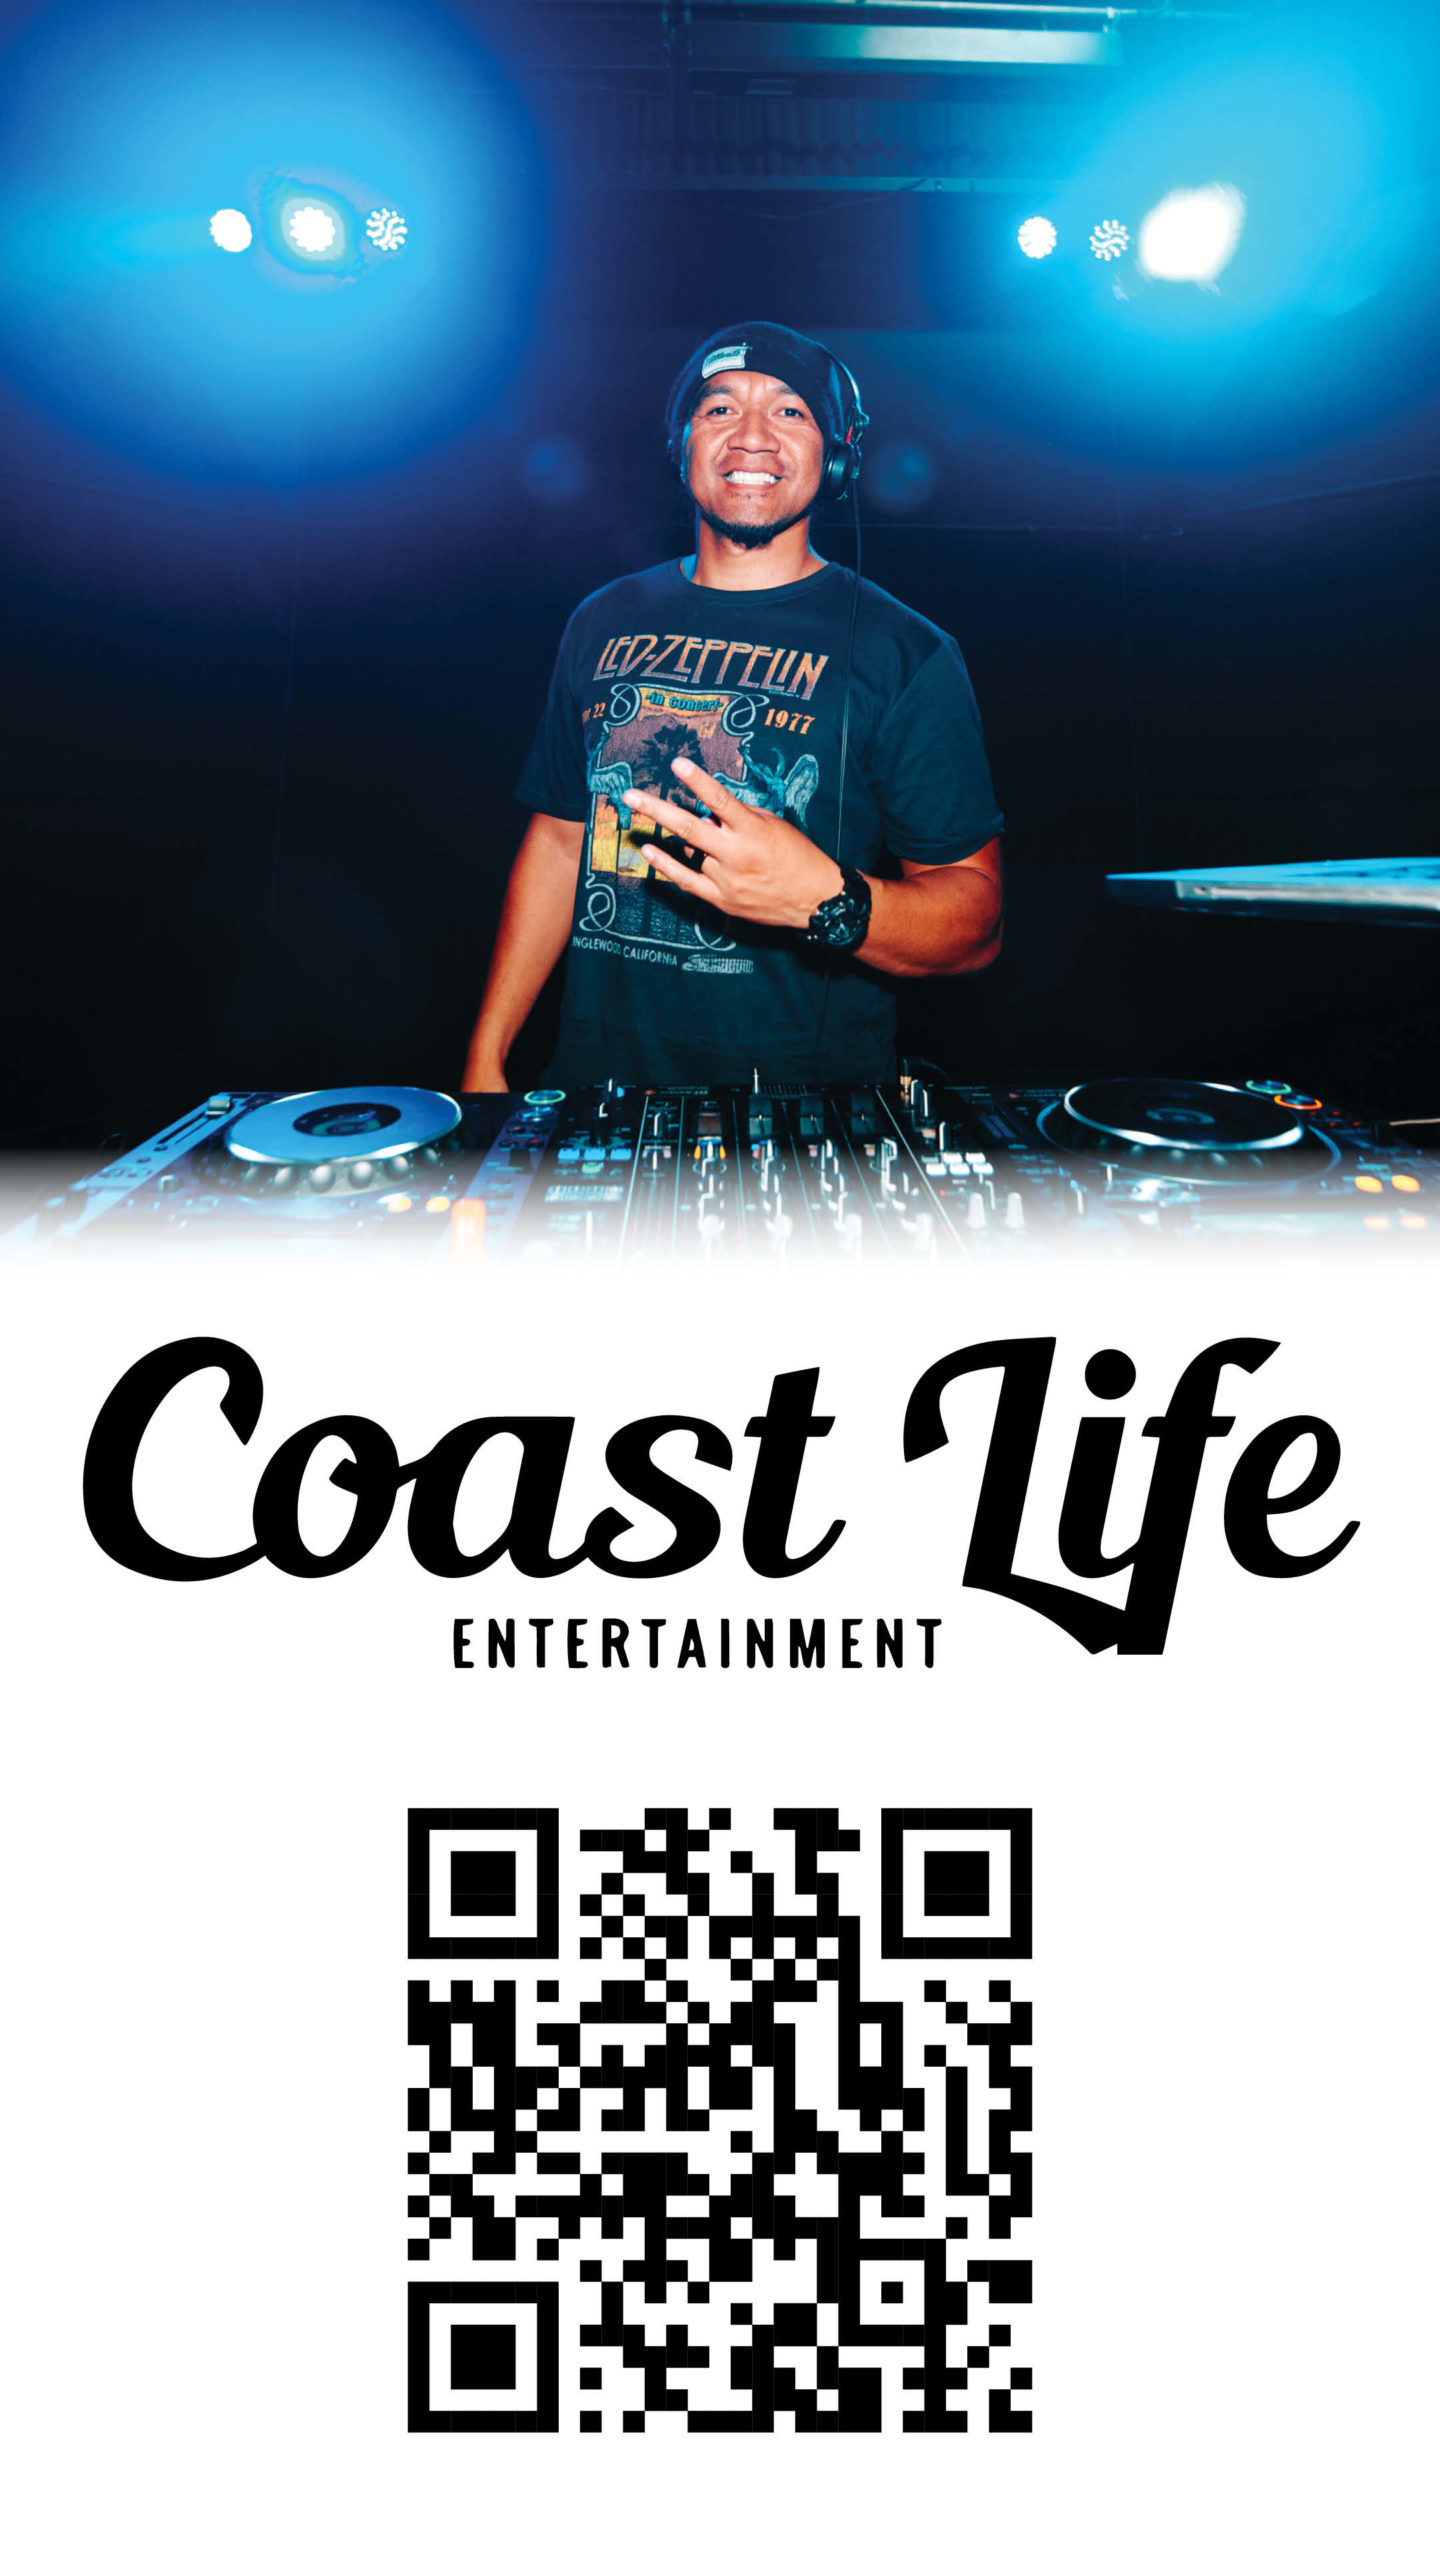 Coastlife Entertainment 22